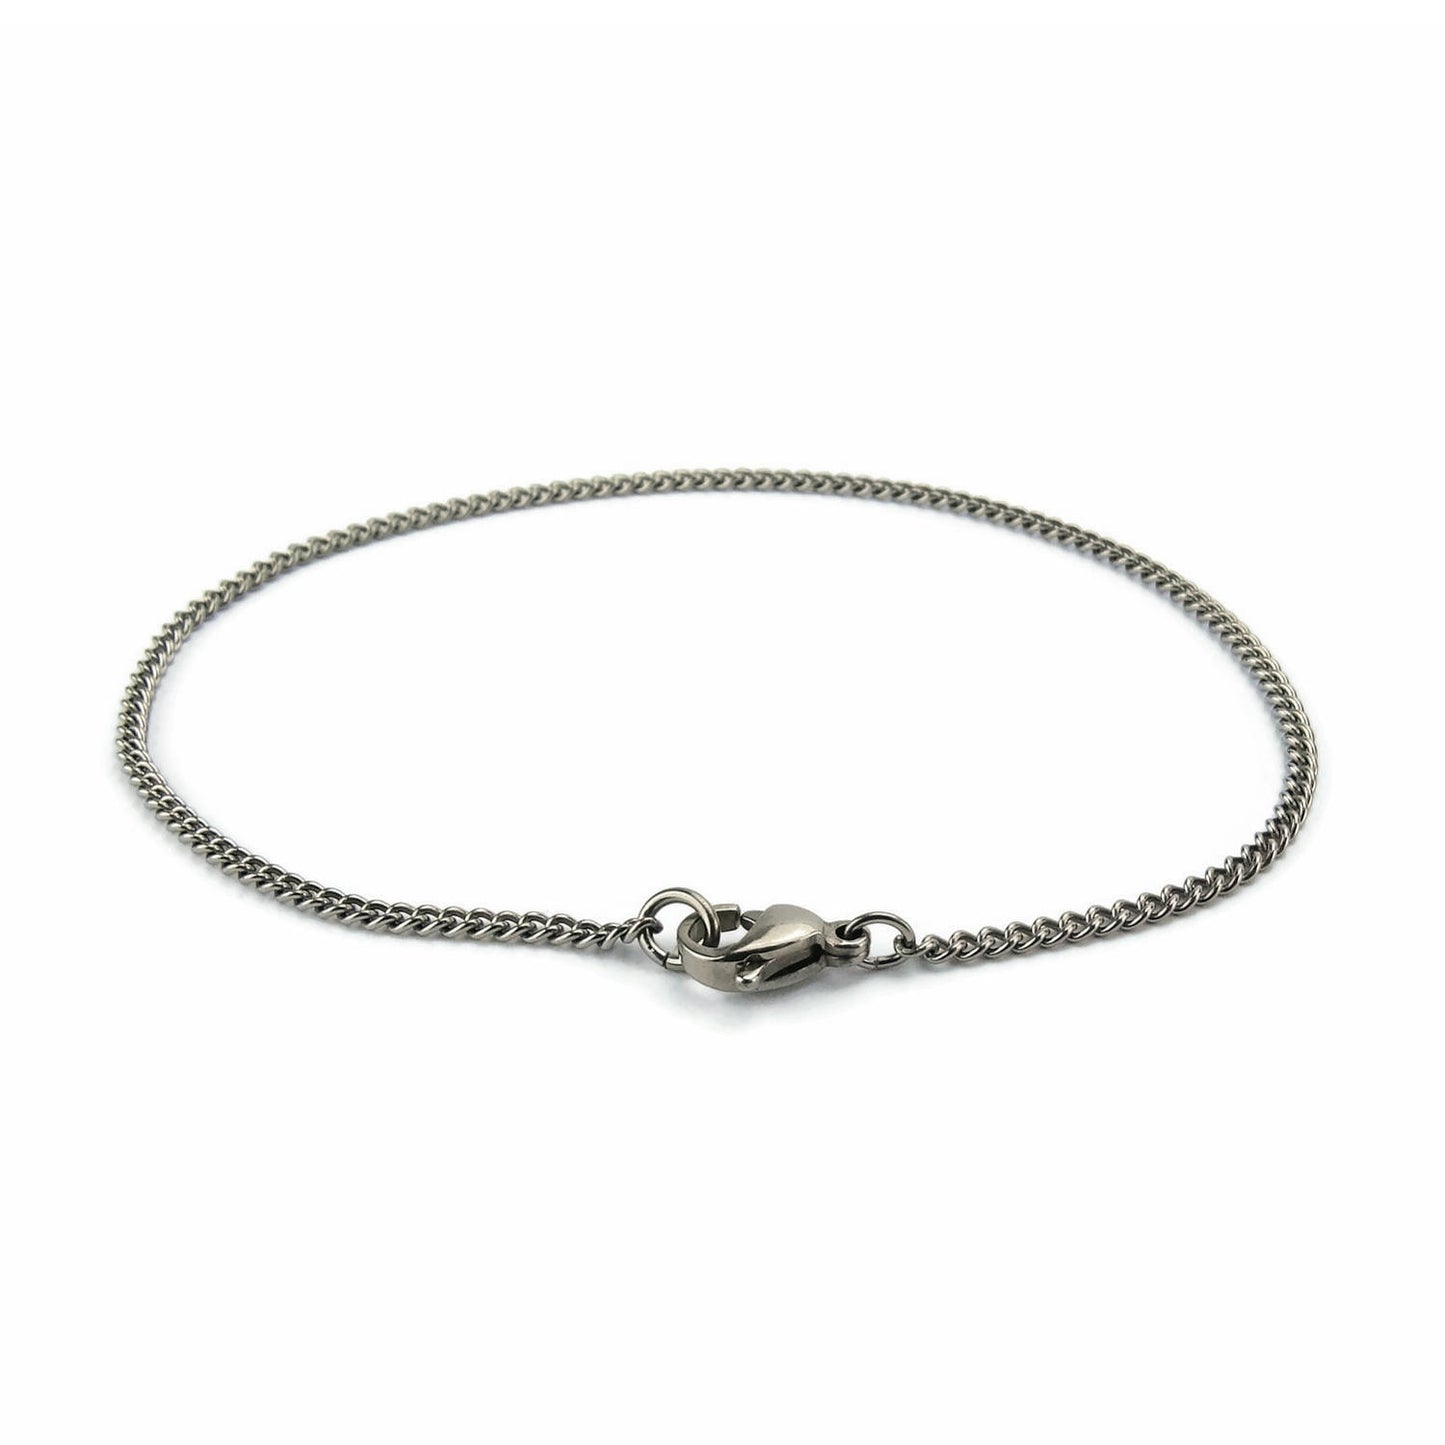 Simple Titanium Bracelet, Pure Titanium Chain Bracelet for Sensitive Skin, For Her or Him, Curb Chain Titanium Bracelet or Anklet